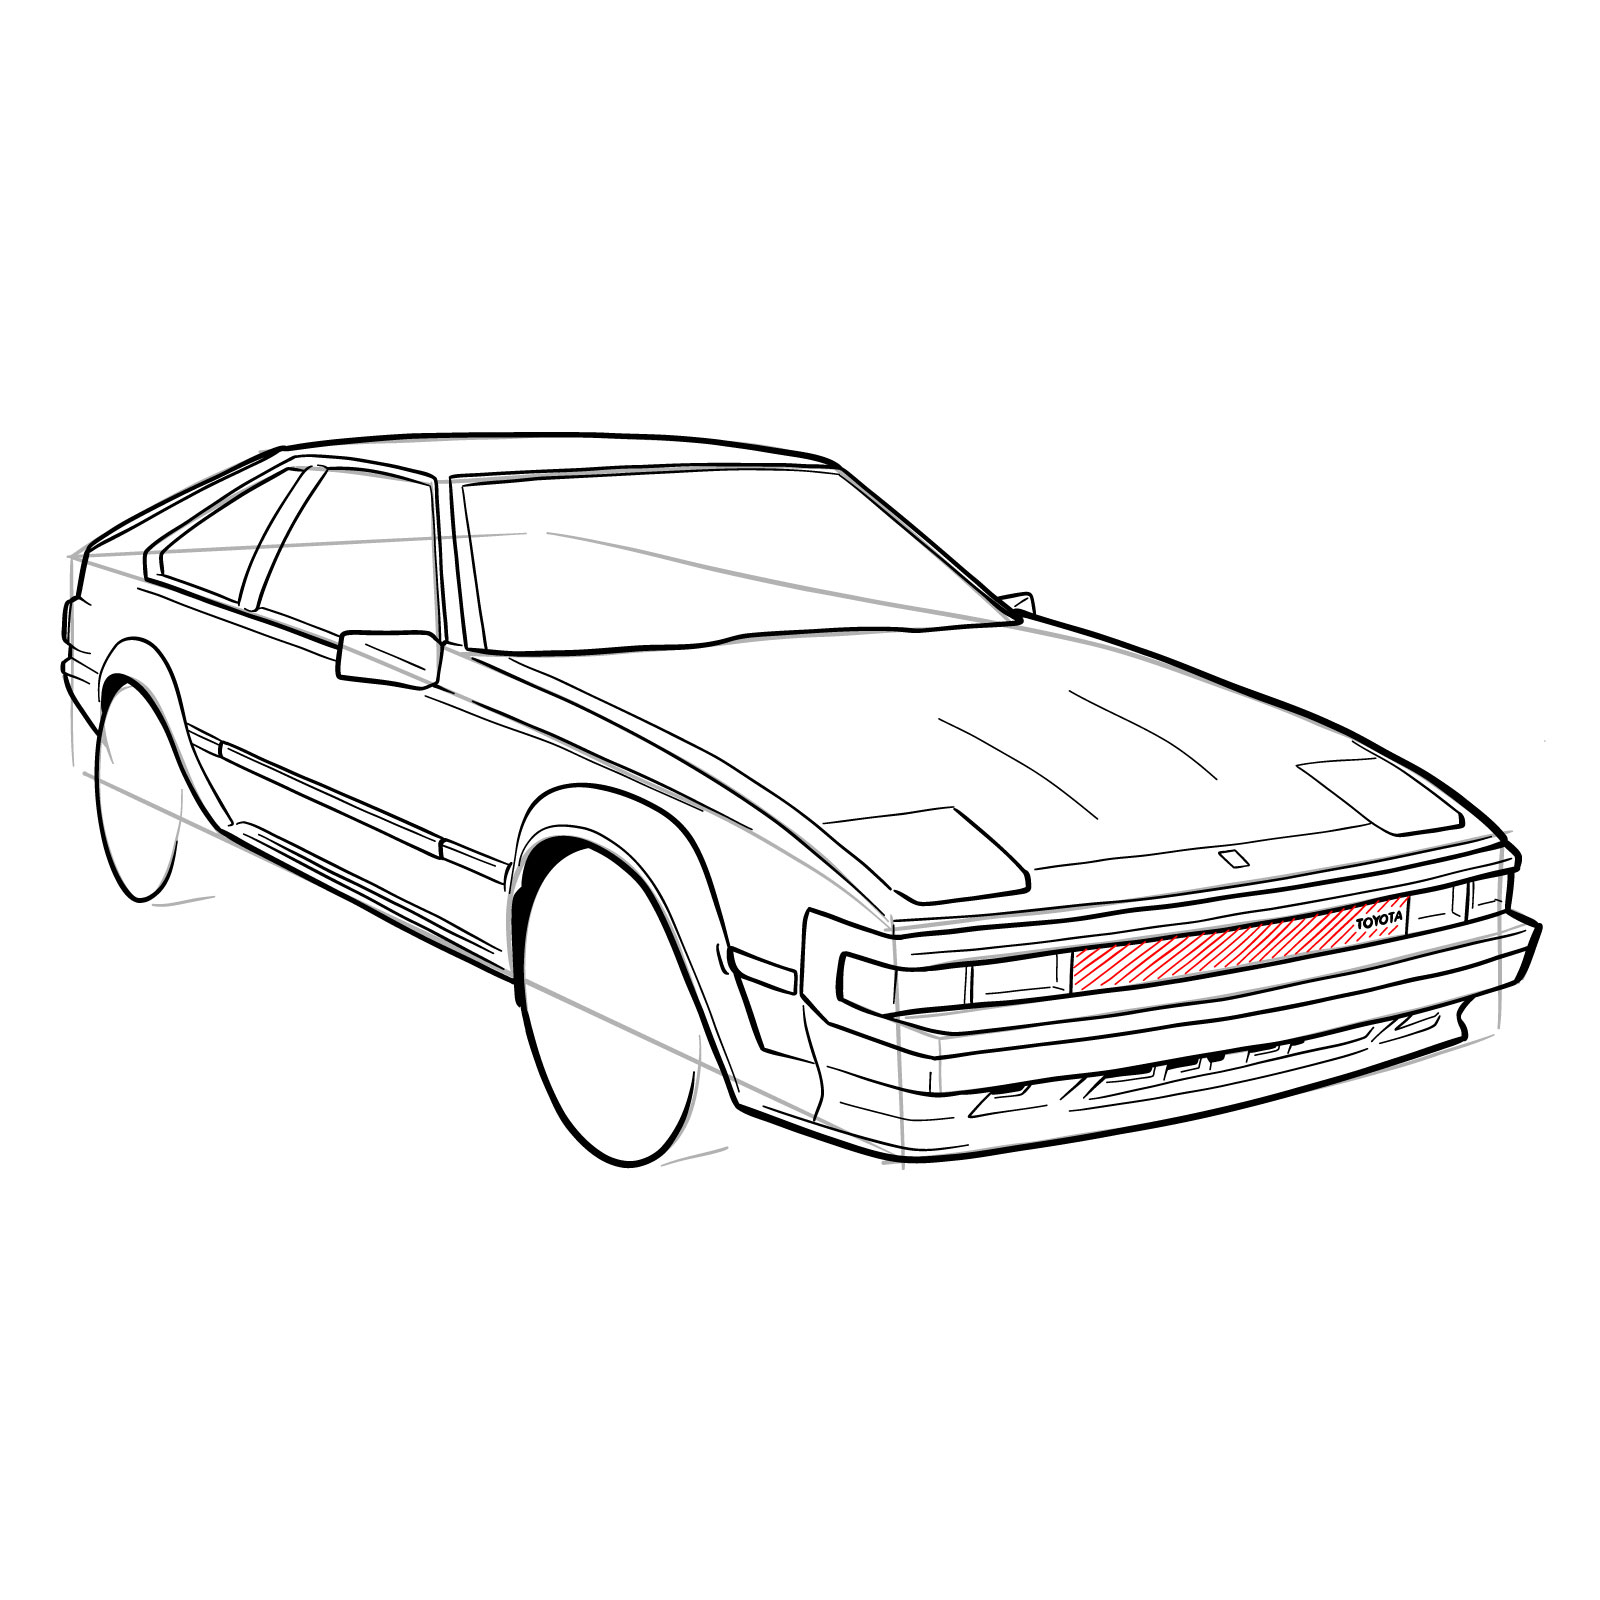 How to draw a 1985 Toyota Celica Supra P Type MK 2 - step 31